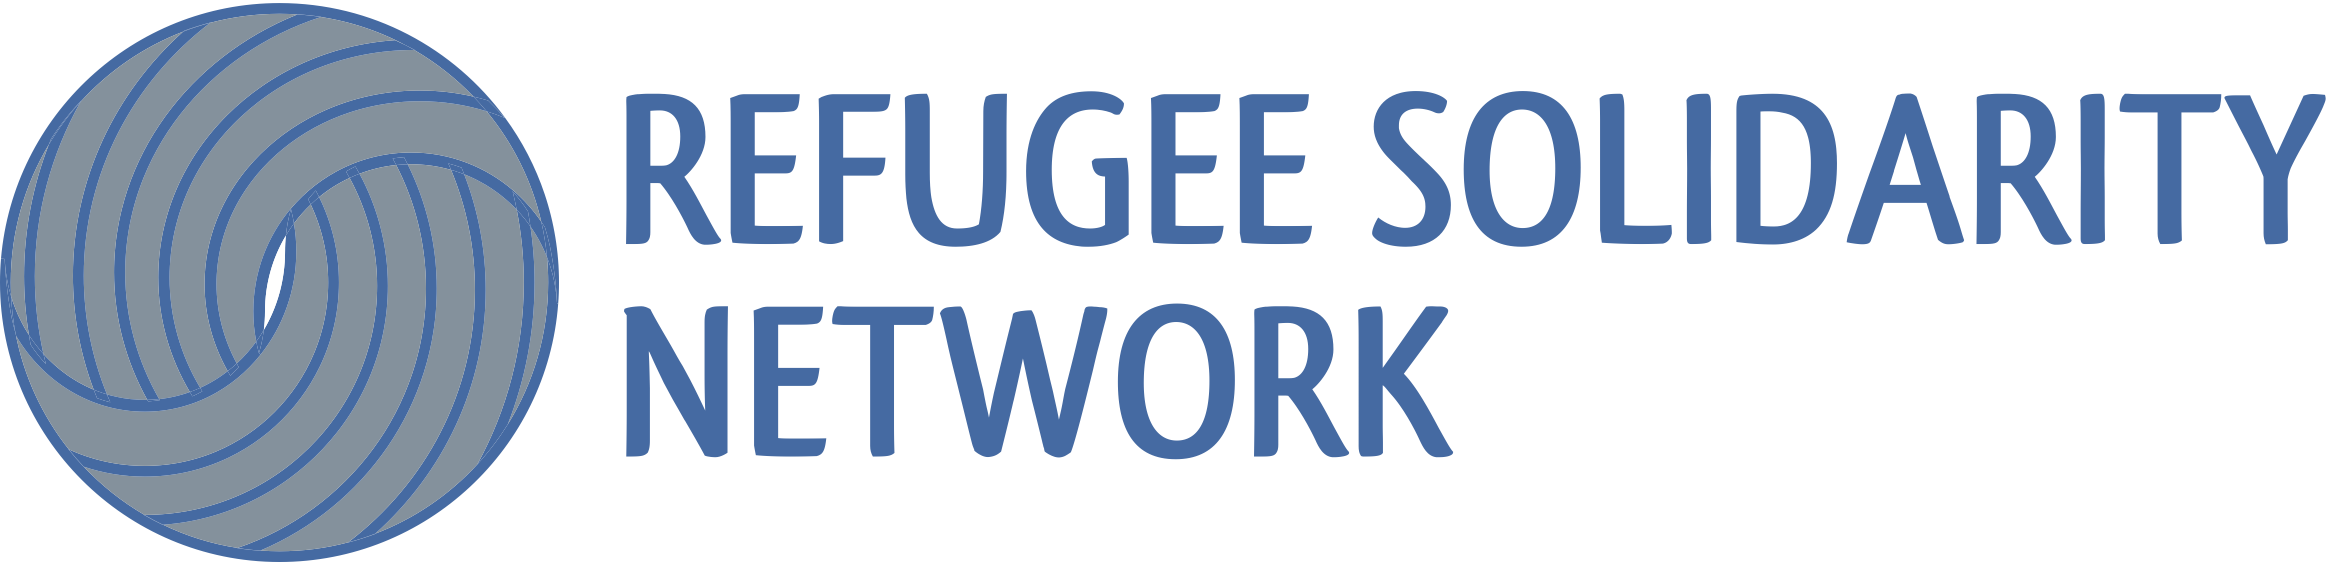 Refugee Solidarity Network